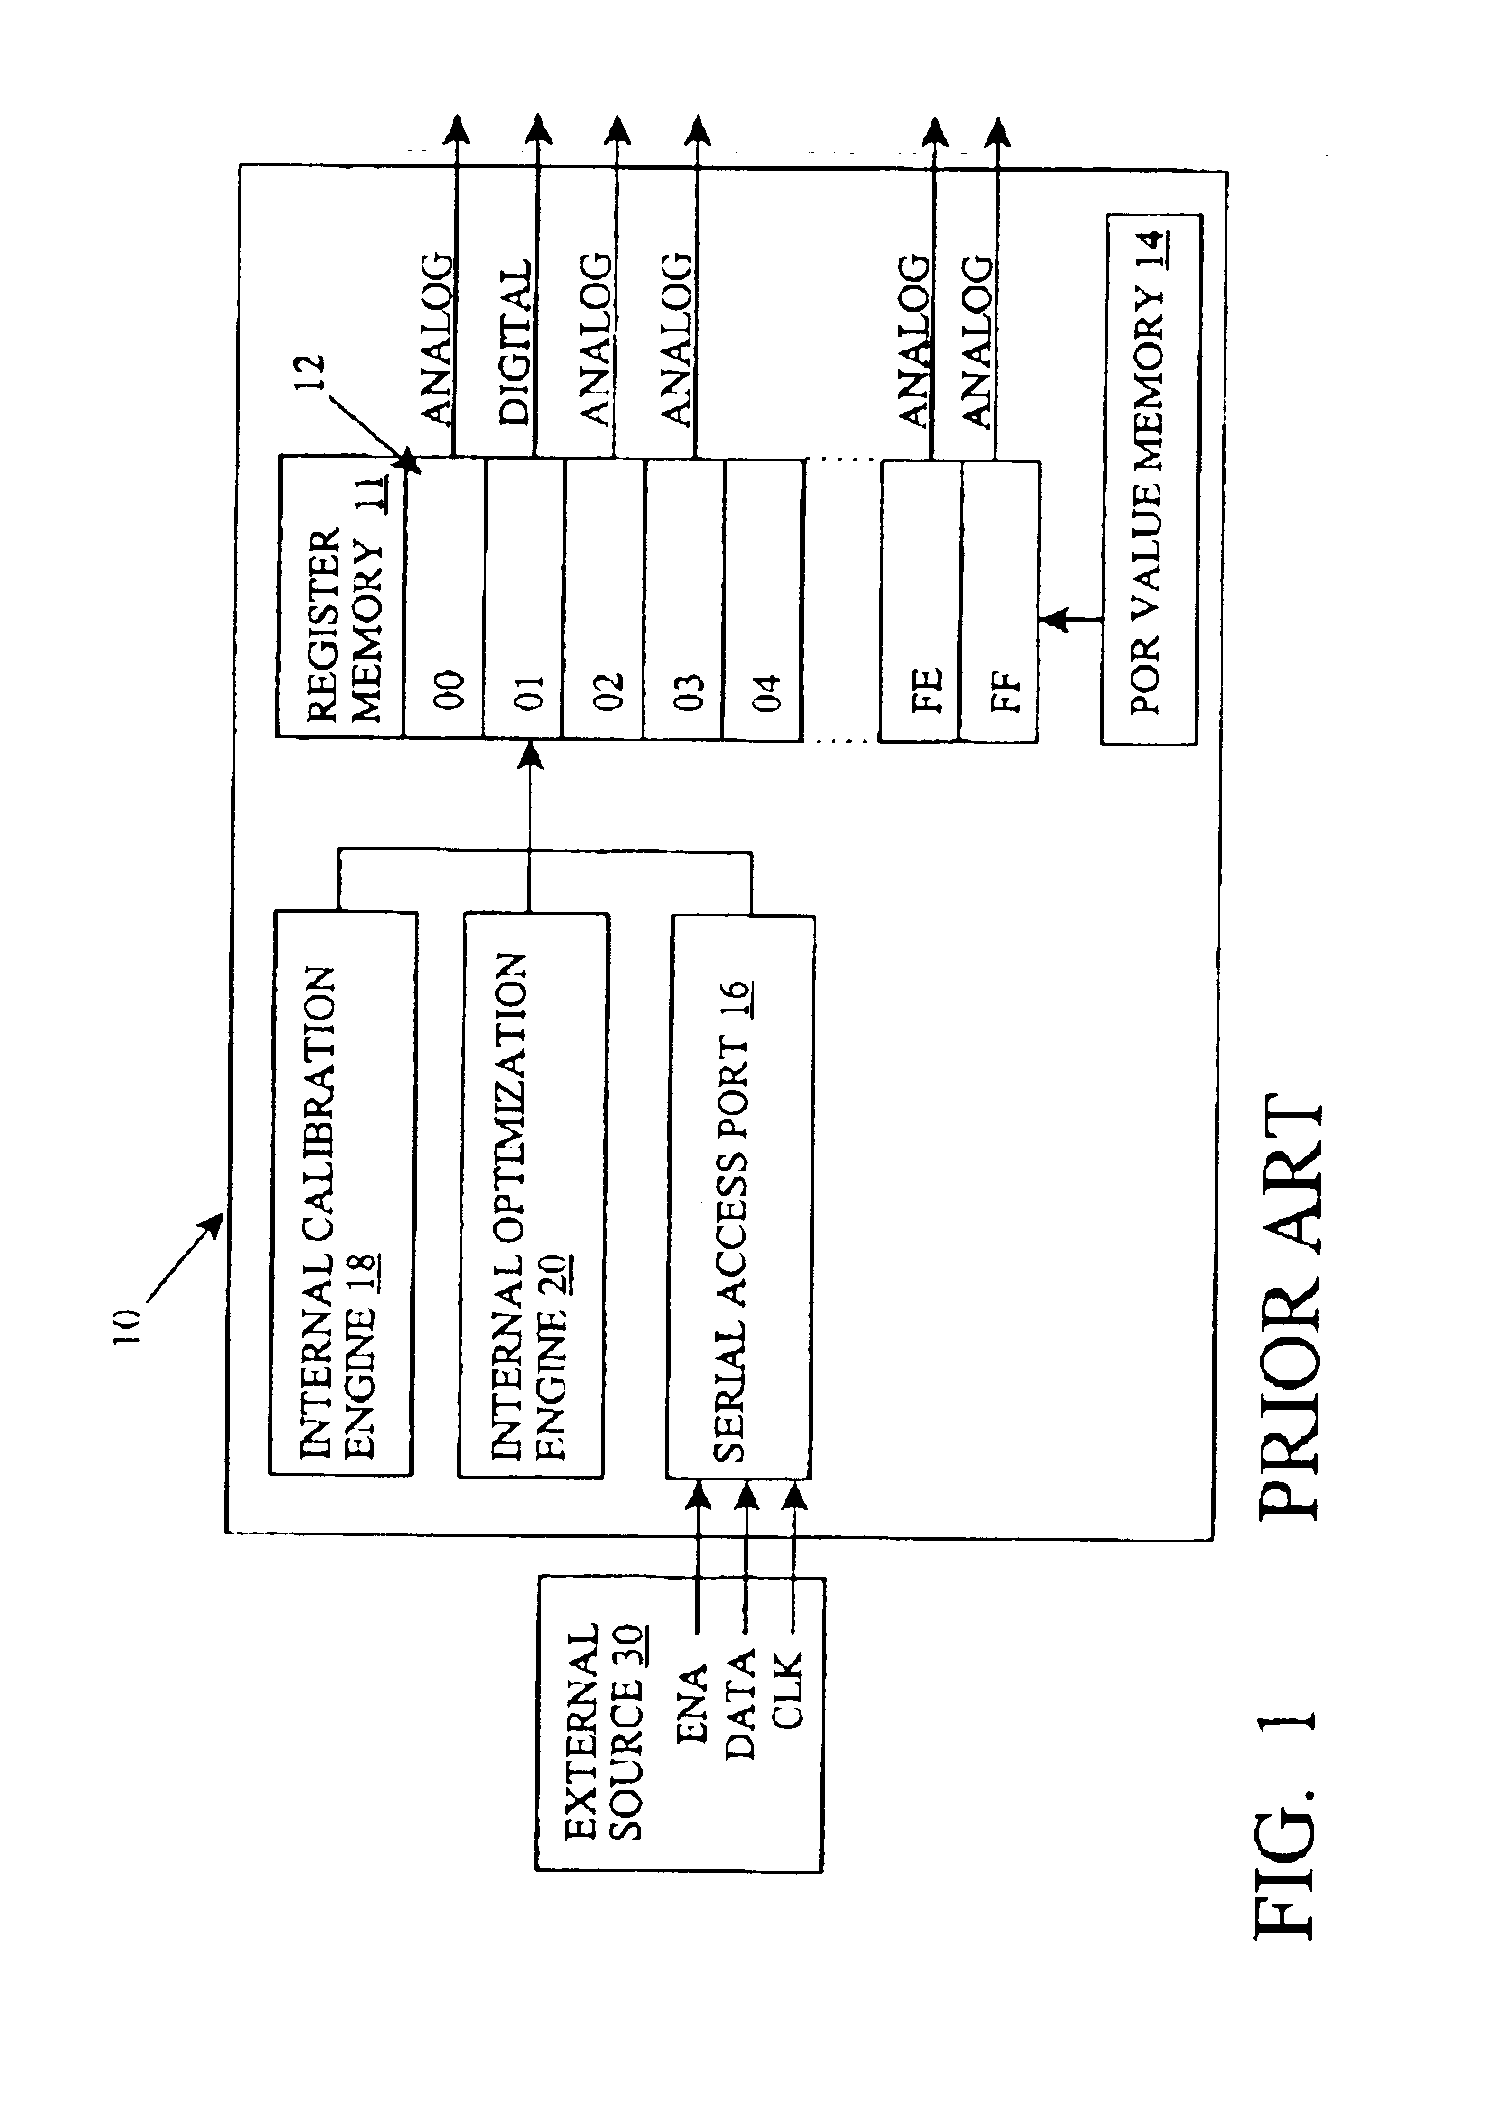 Integrated circuit having register configuration sets